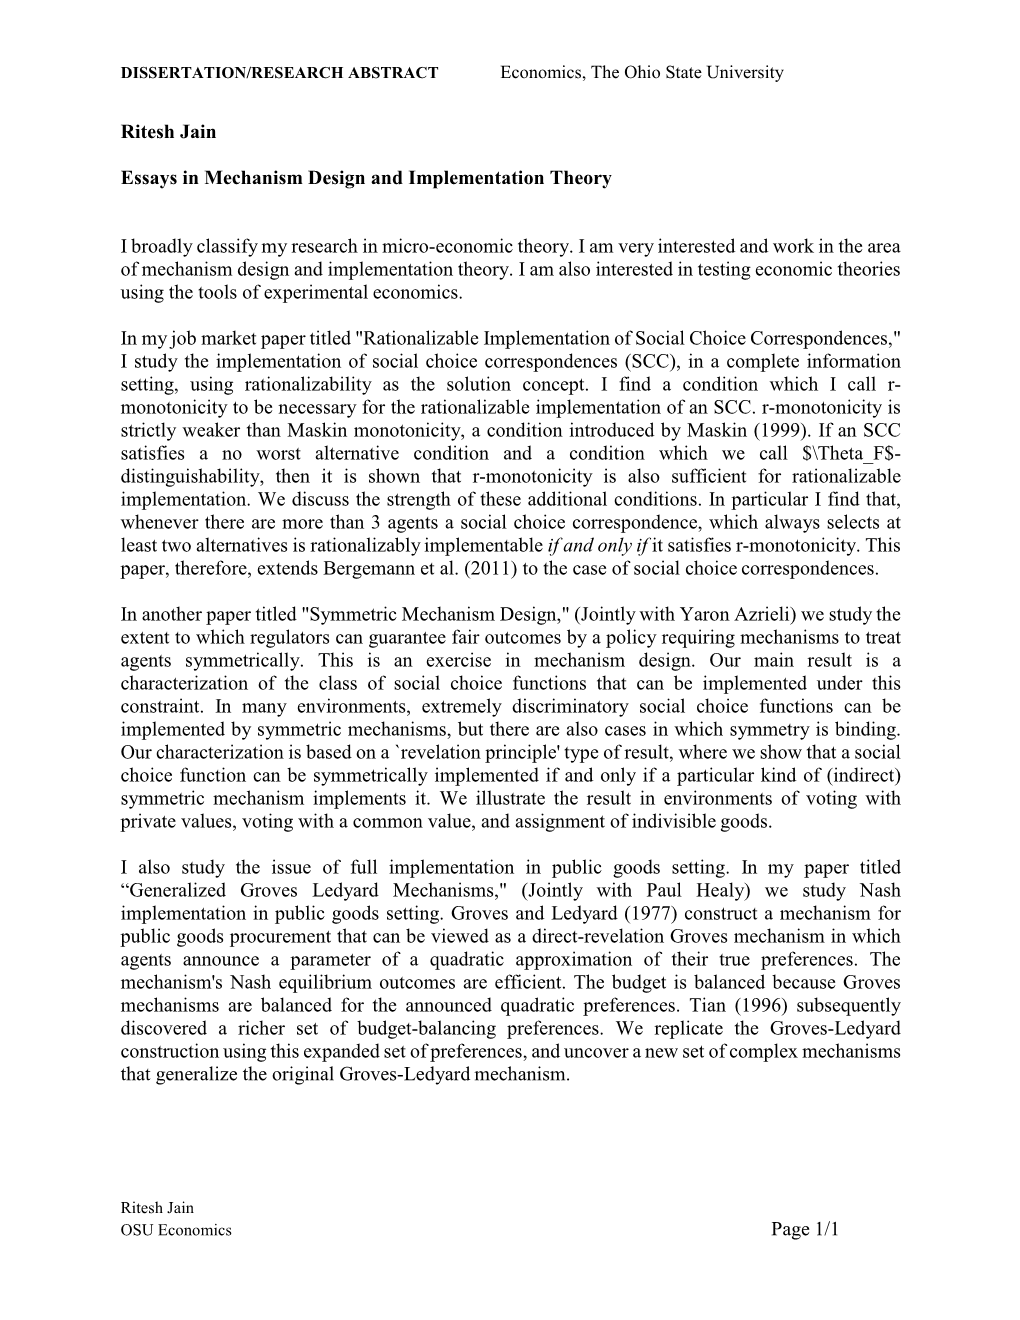 Ritesh Jain Essays in Mechanism Design and Implementation Theory